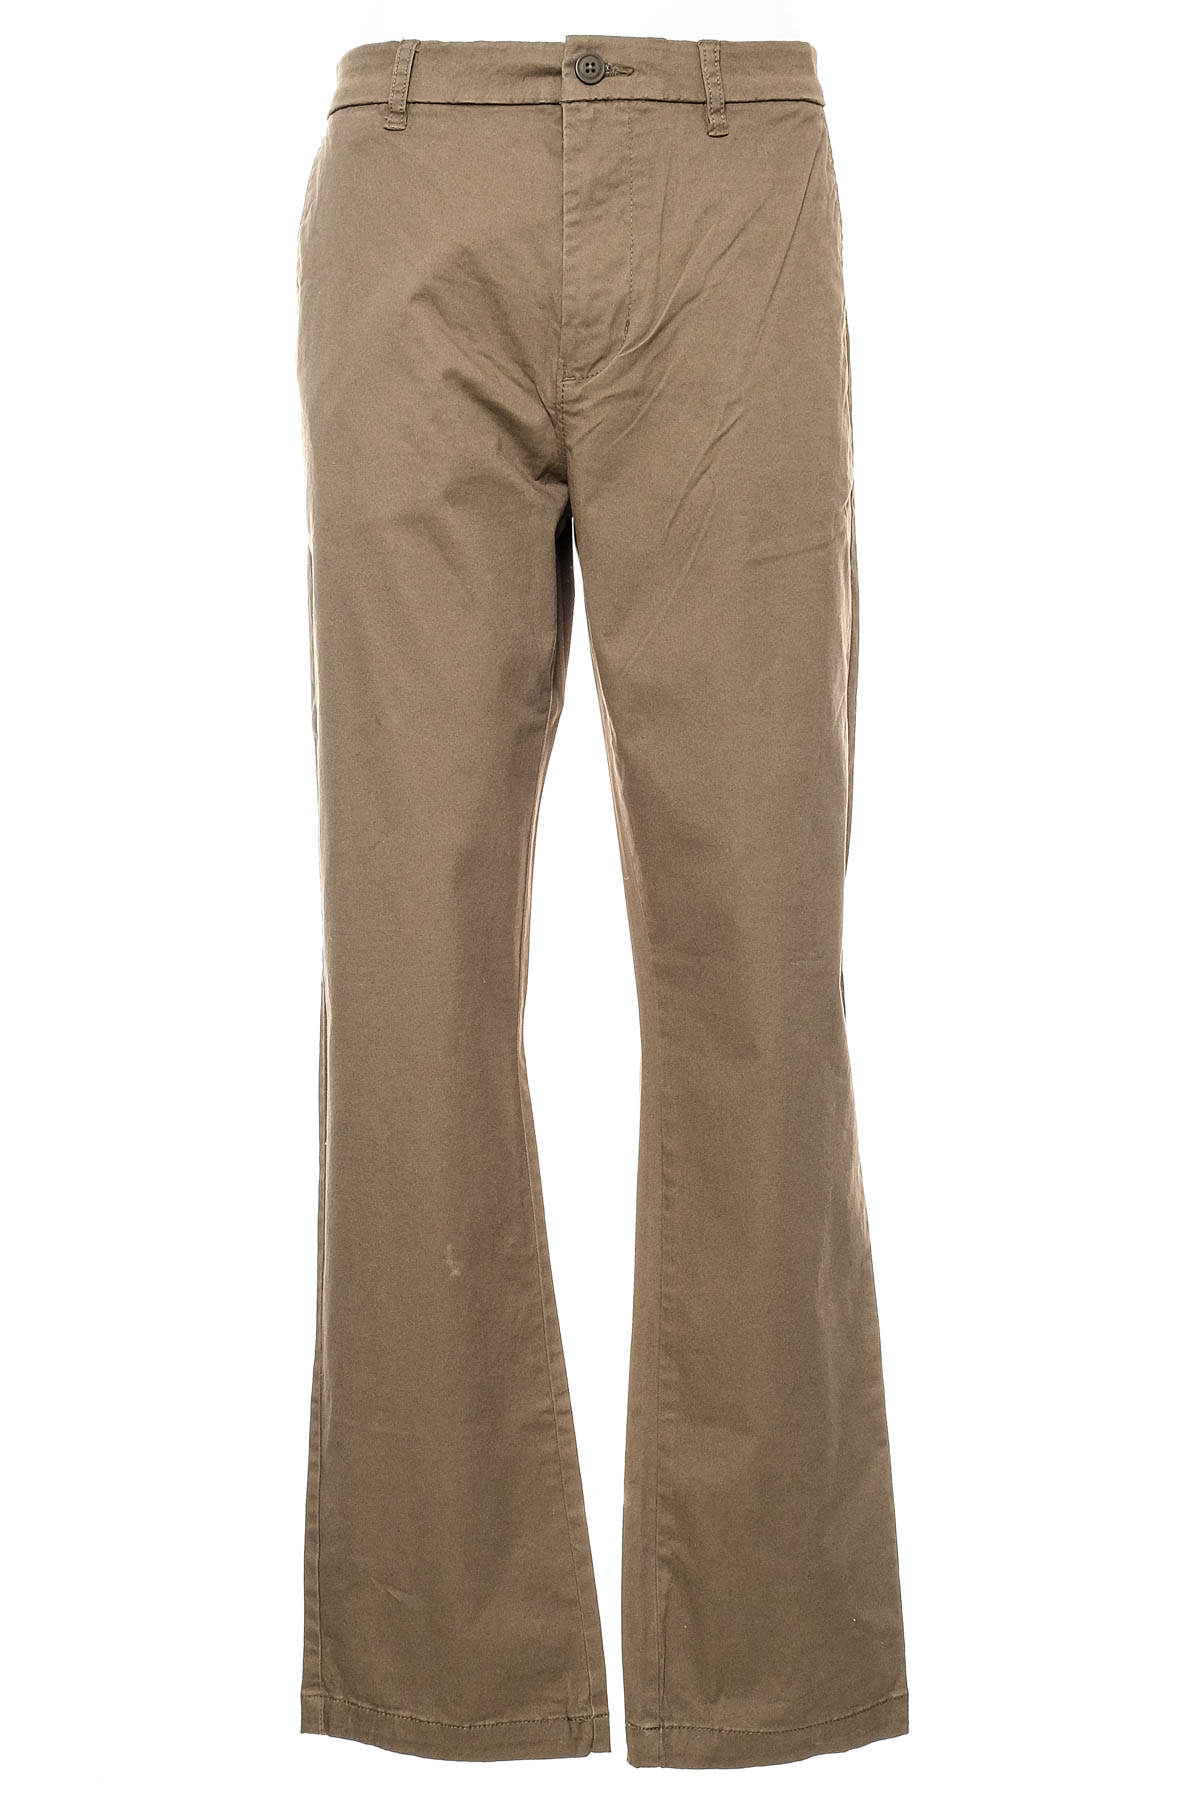 Men's trousers - Dunnes Stores - 0